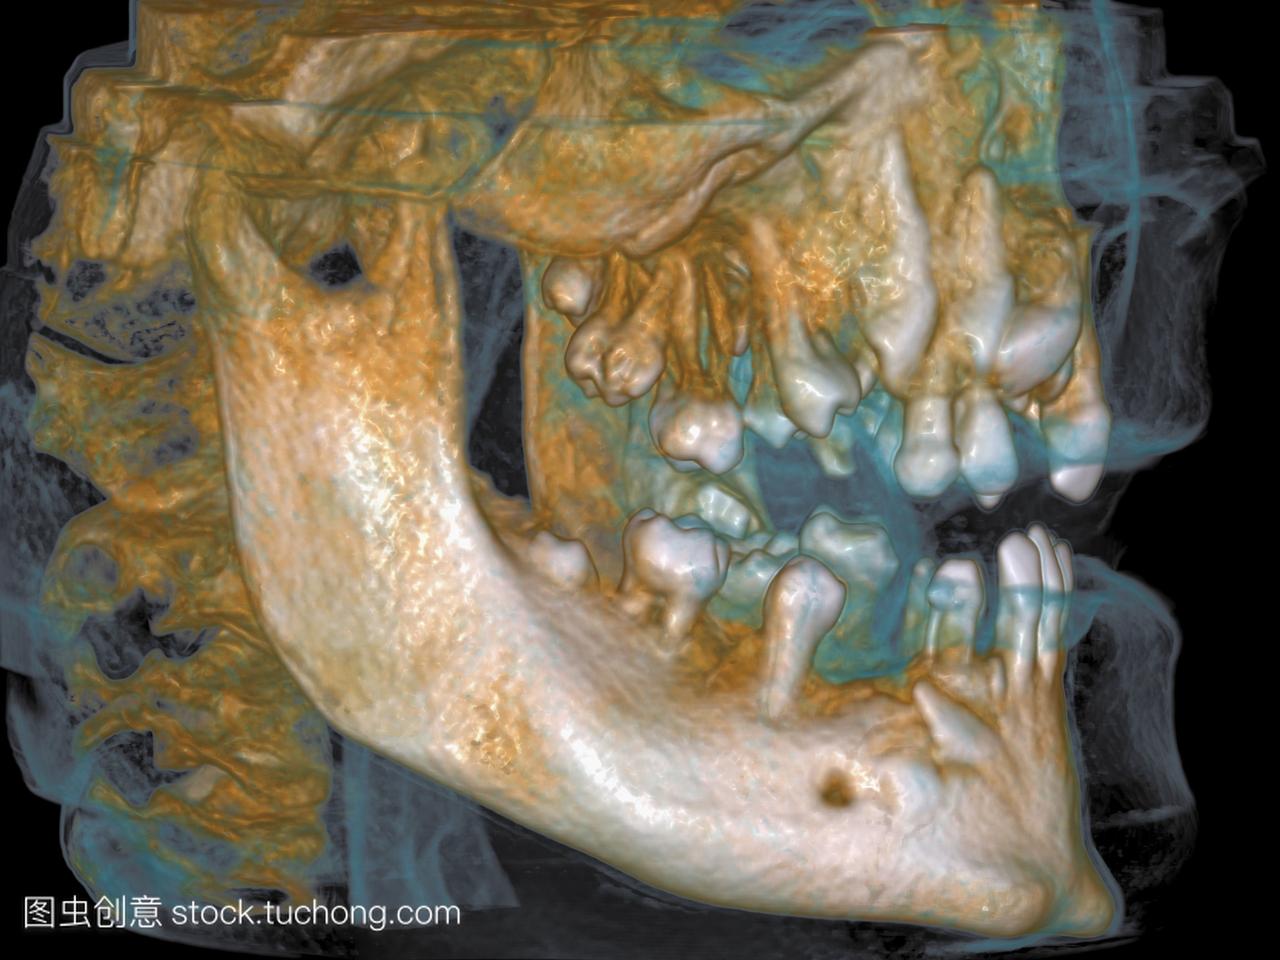 Cleidocranial发育不良3dCT扫描。侧面的三维